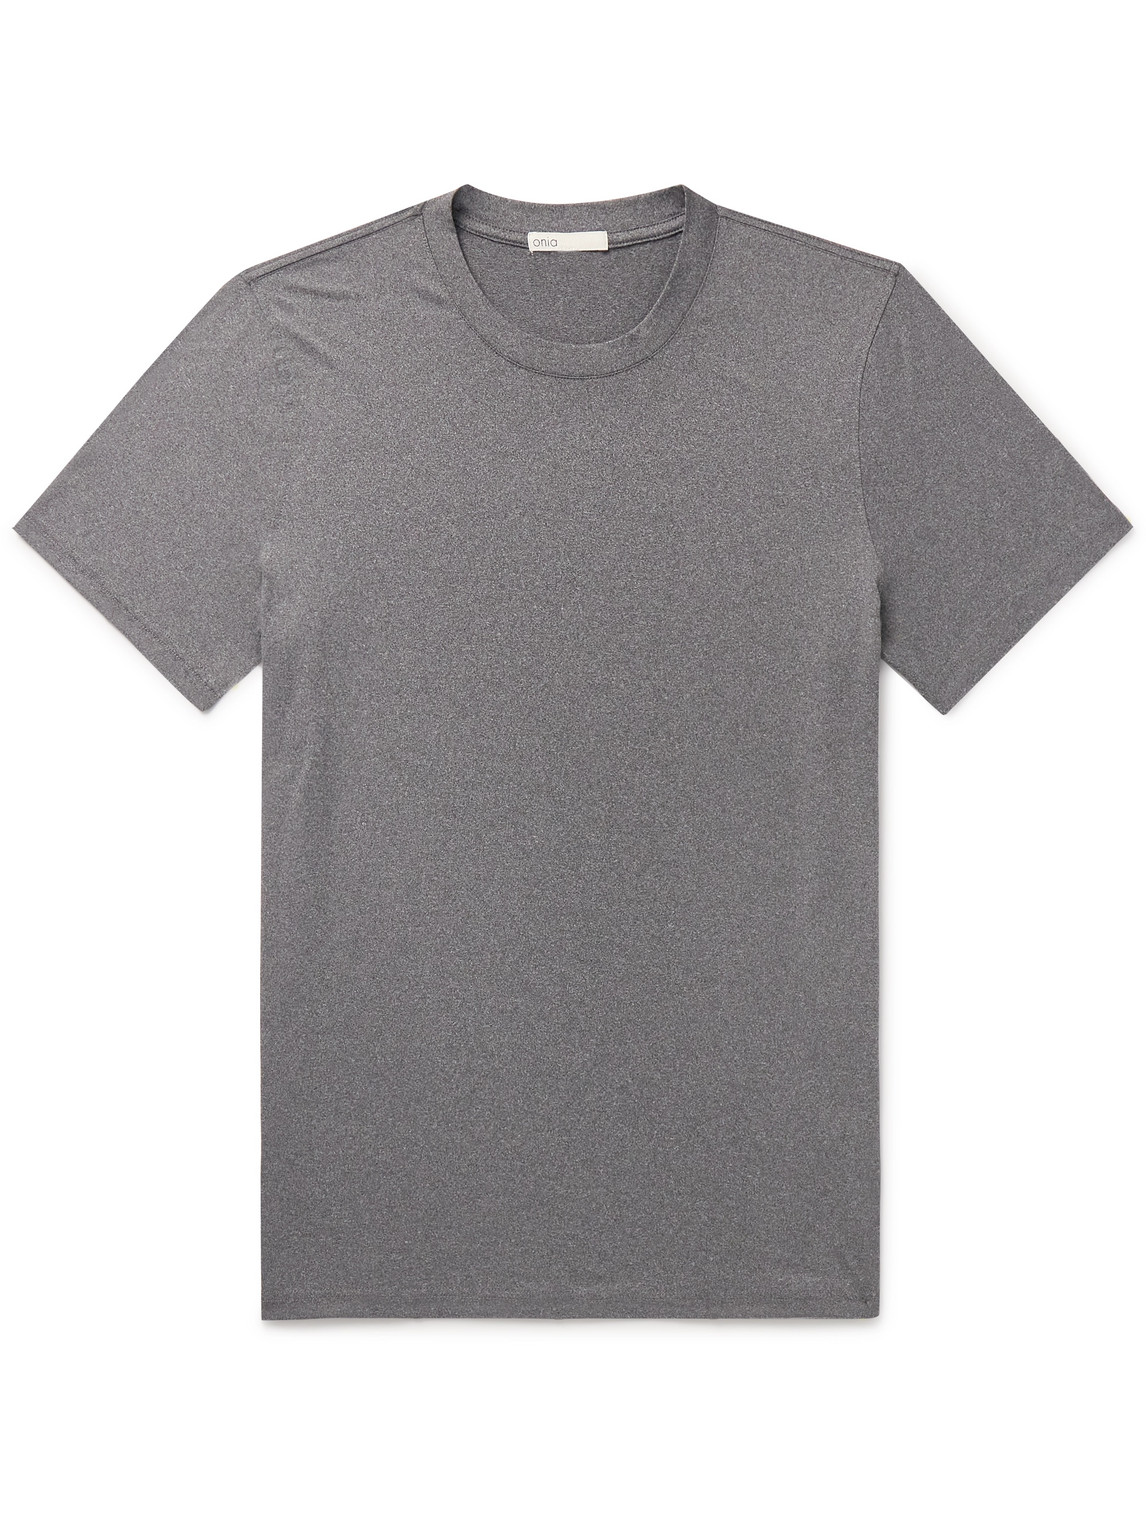 Onia - Everyday UltraLite Stretch-Jersey T-Shirt - Men - Gray - L von Onia